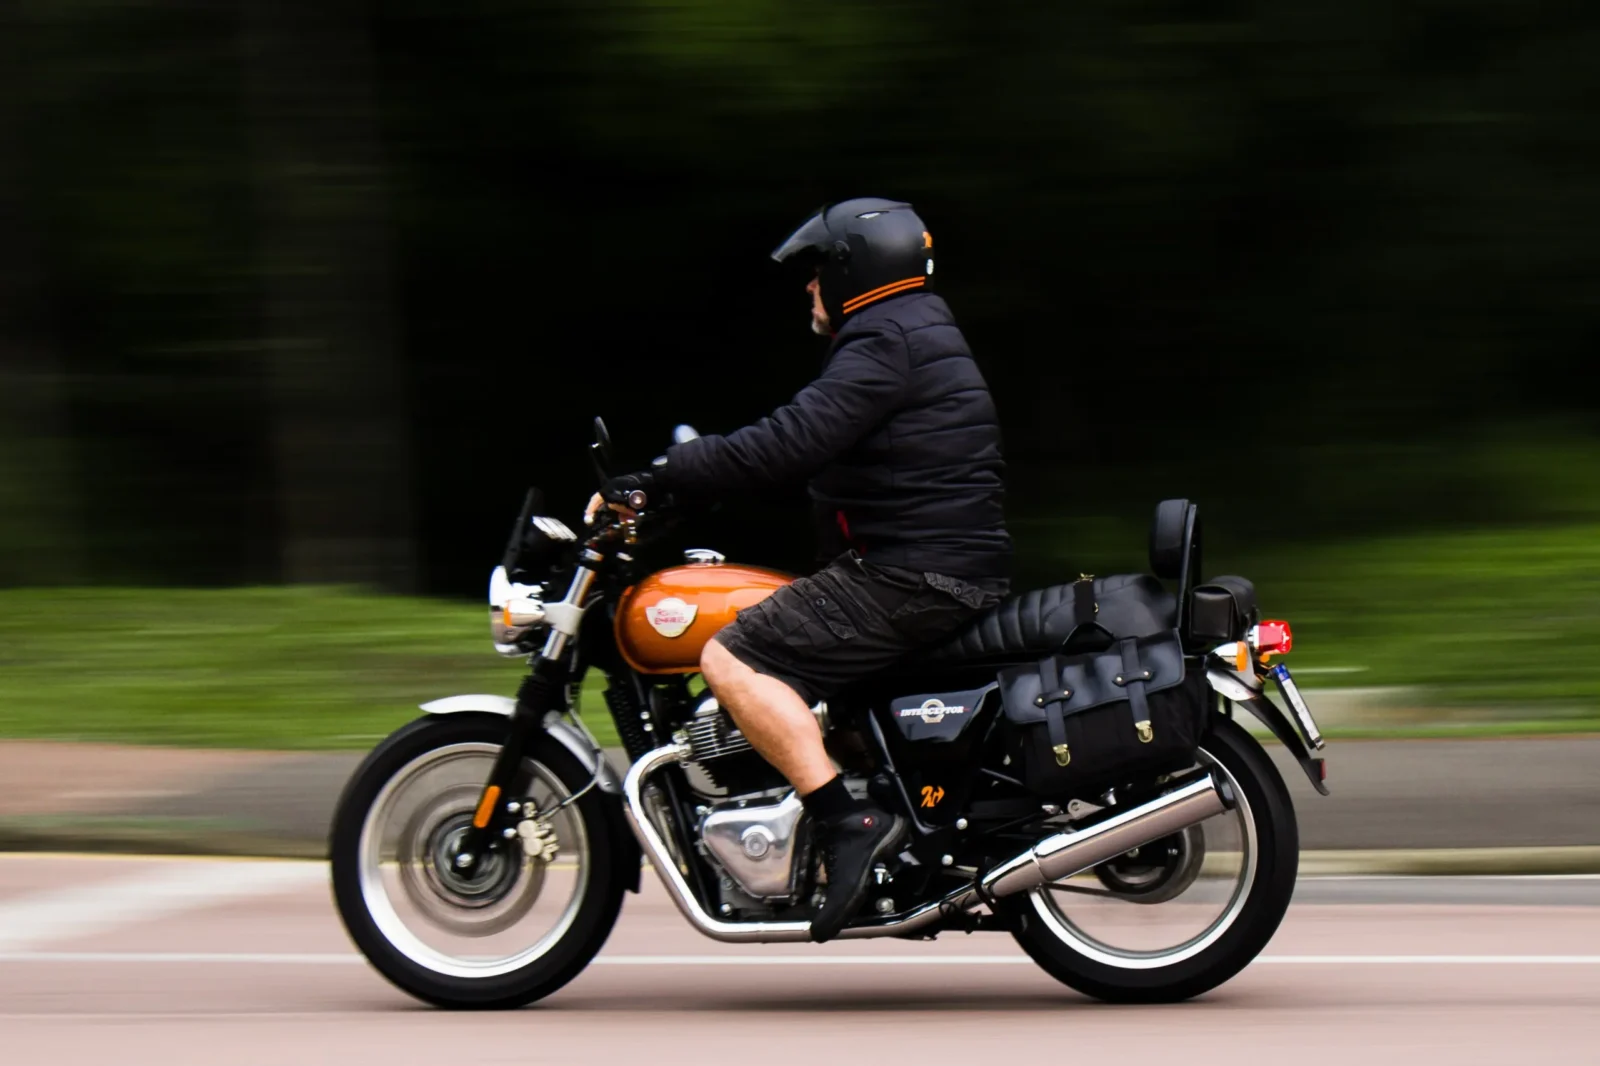 Digital Marketing Services for Motorcycle Dealerships